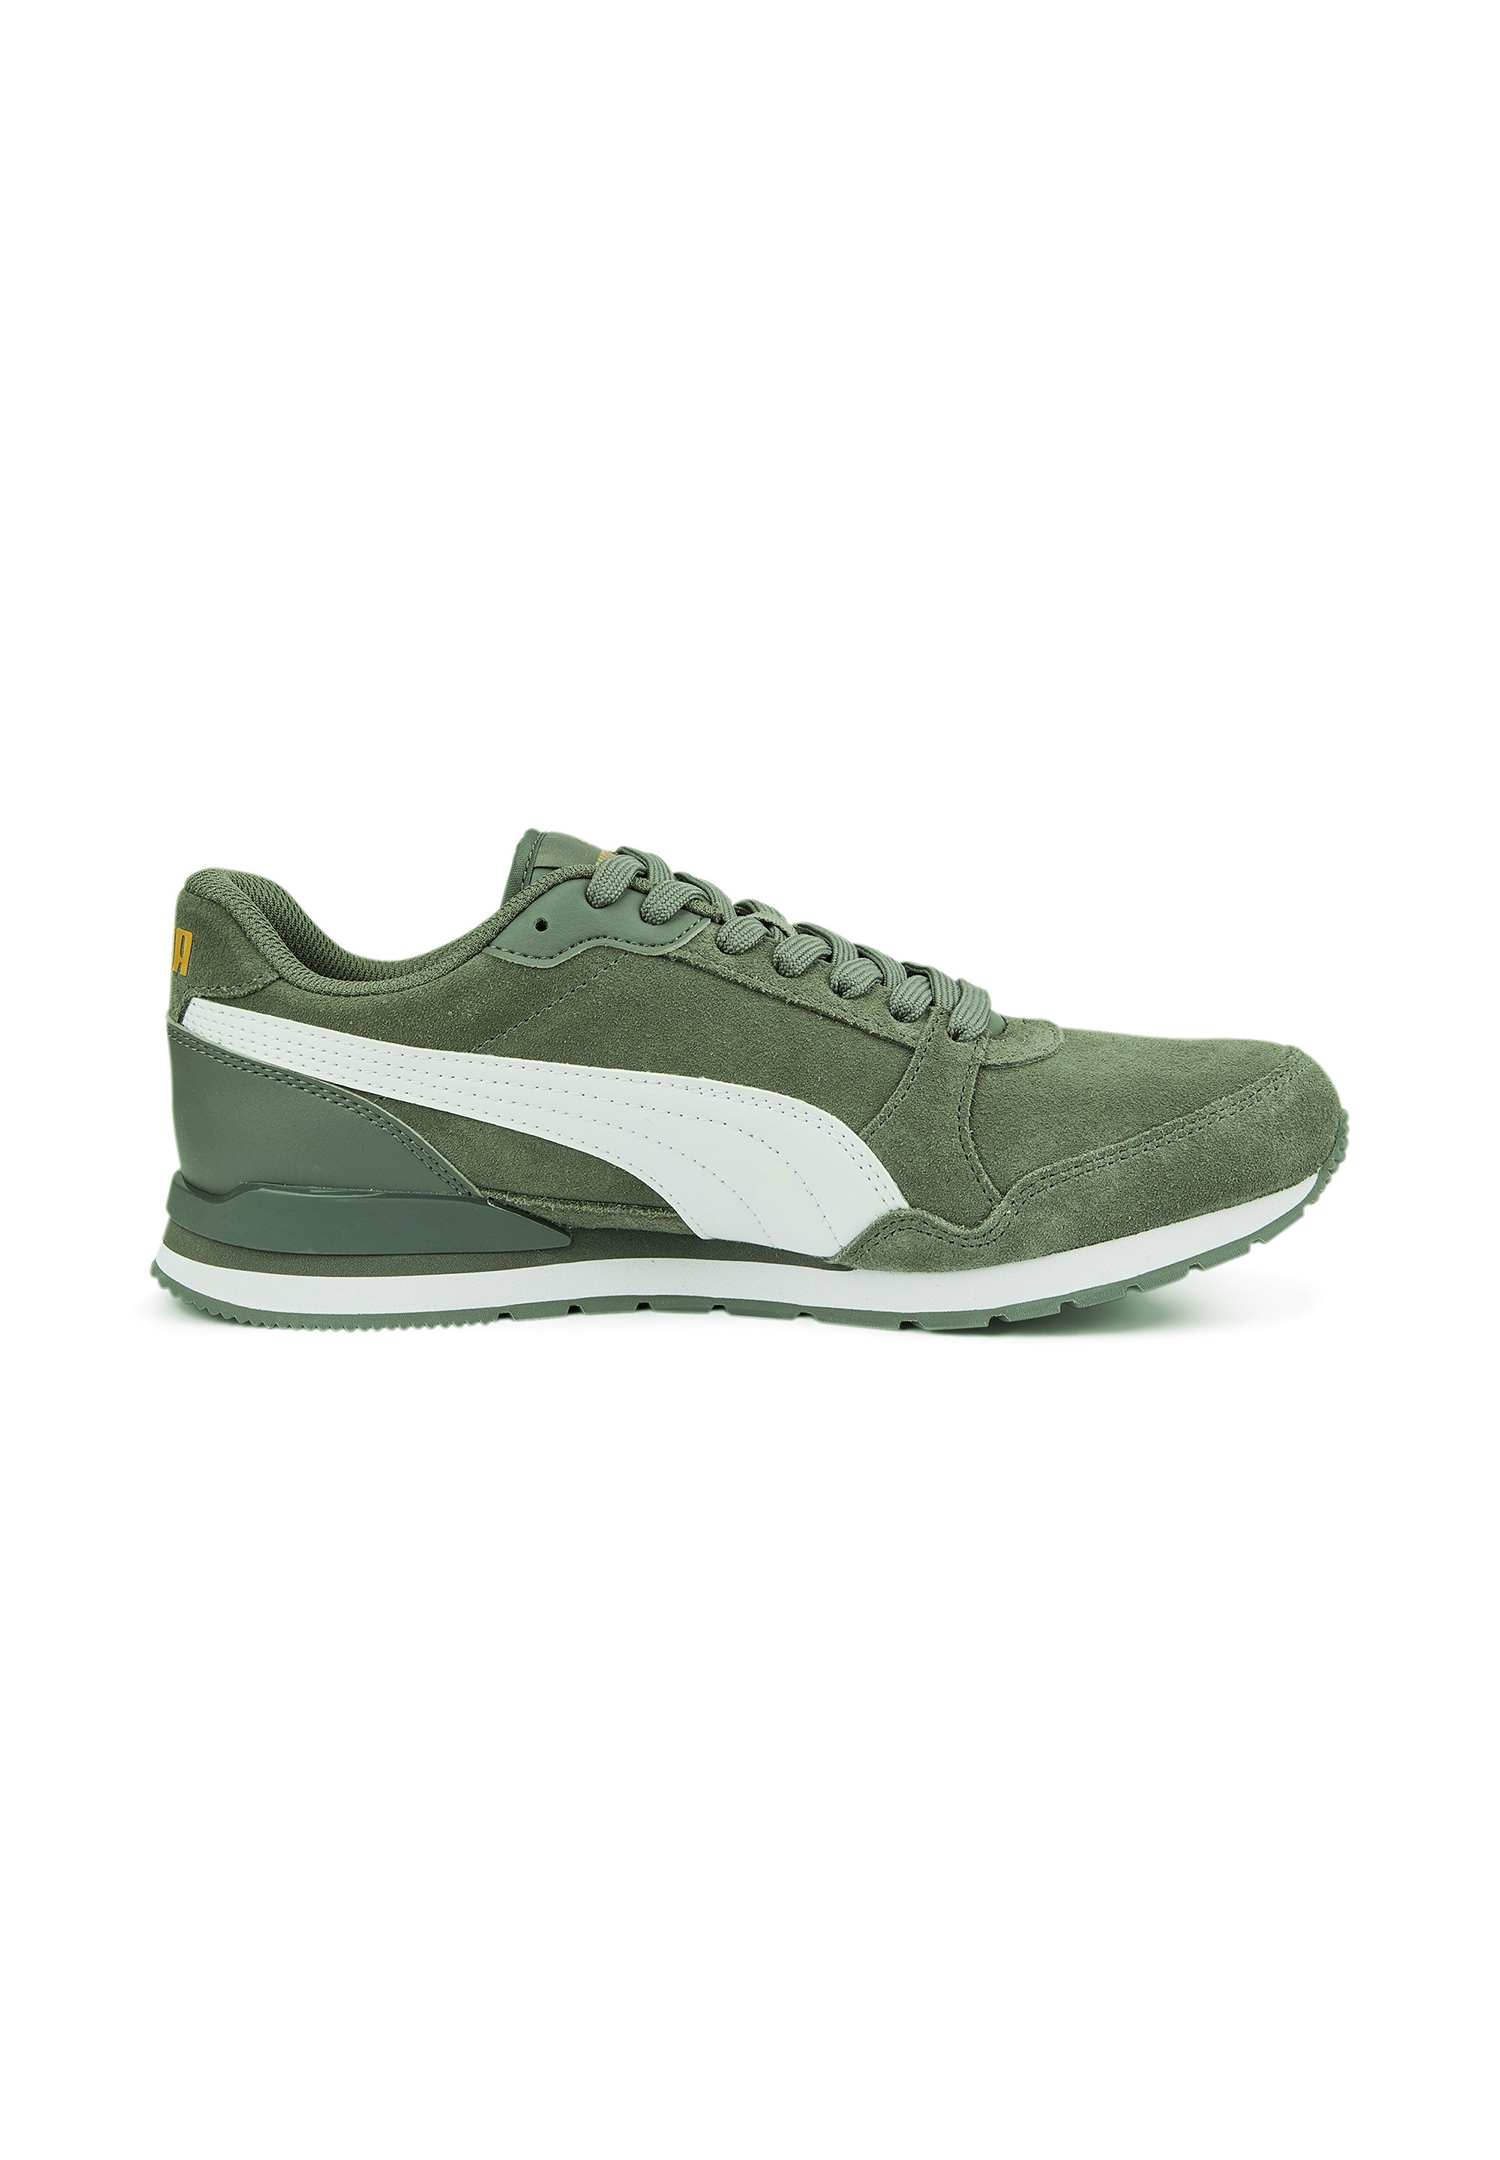 Puma ST Runner v3 SD Sneaker Schuhe 387646 04 Herren Schuhe grün